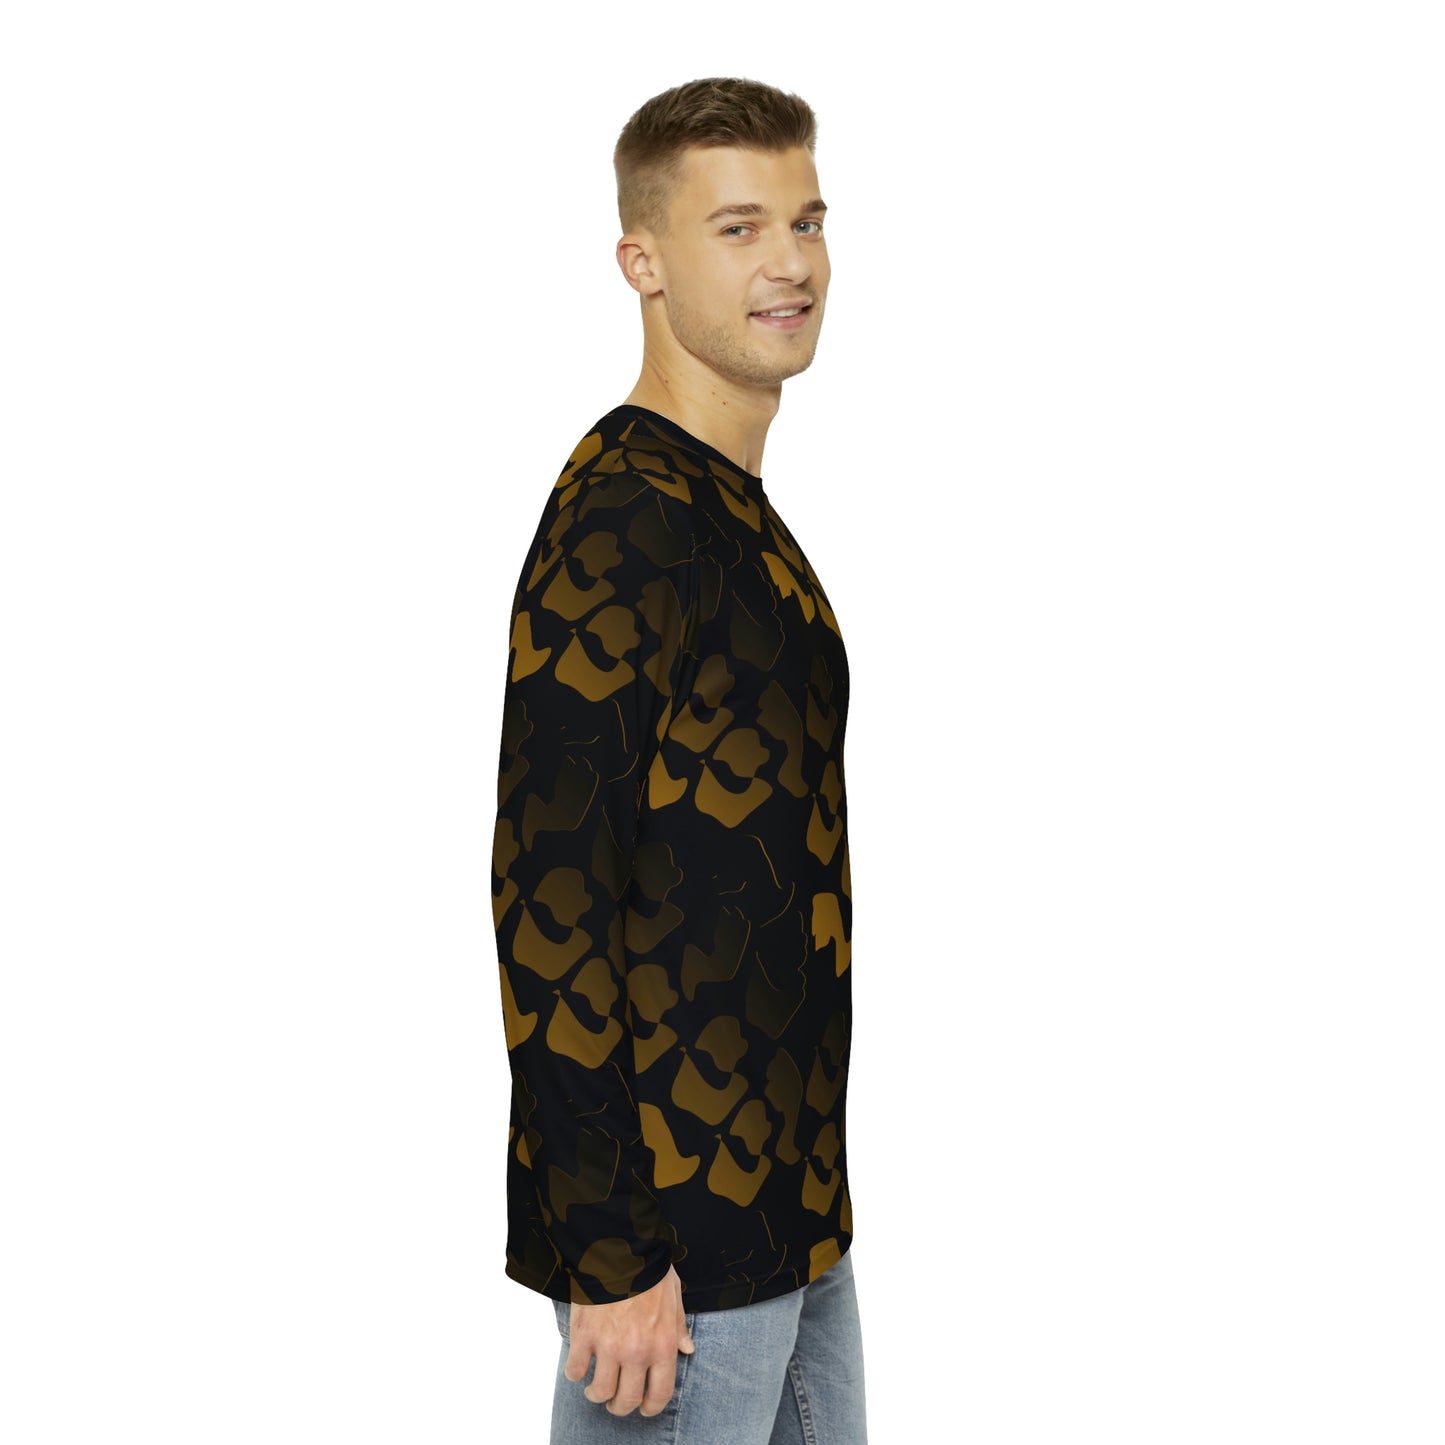 Black / Gold Men’s Long Sleeve T-Shirt - By Zag Savant